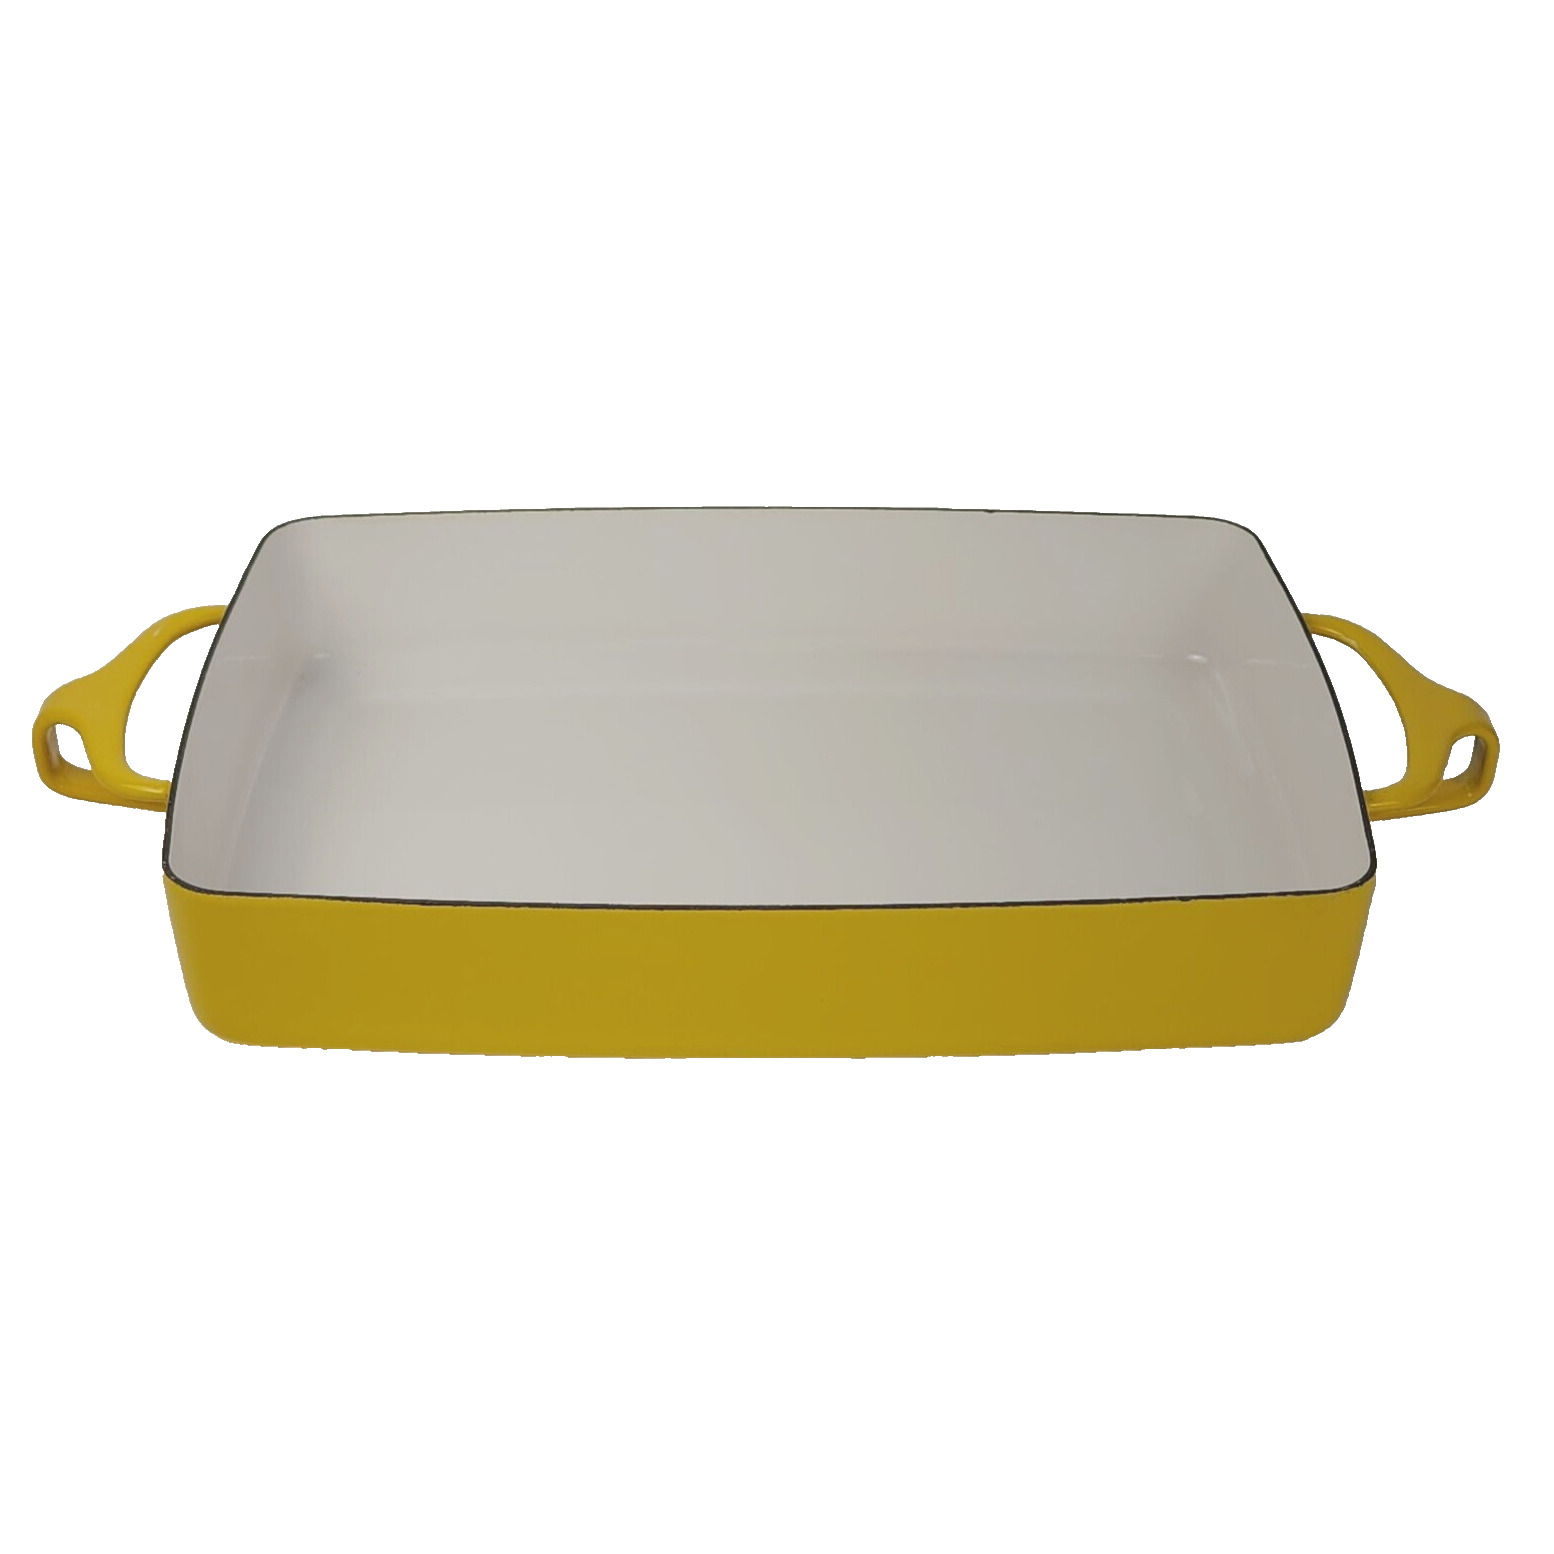 Vintage Dansk Designs France IHQ Kobenstyle Yellow Enamel Baking Pan Dish 2Qt